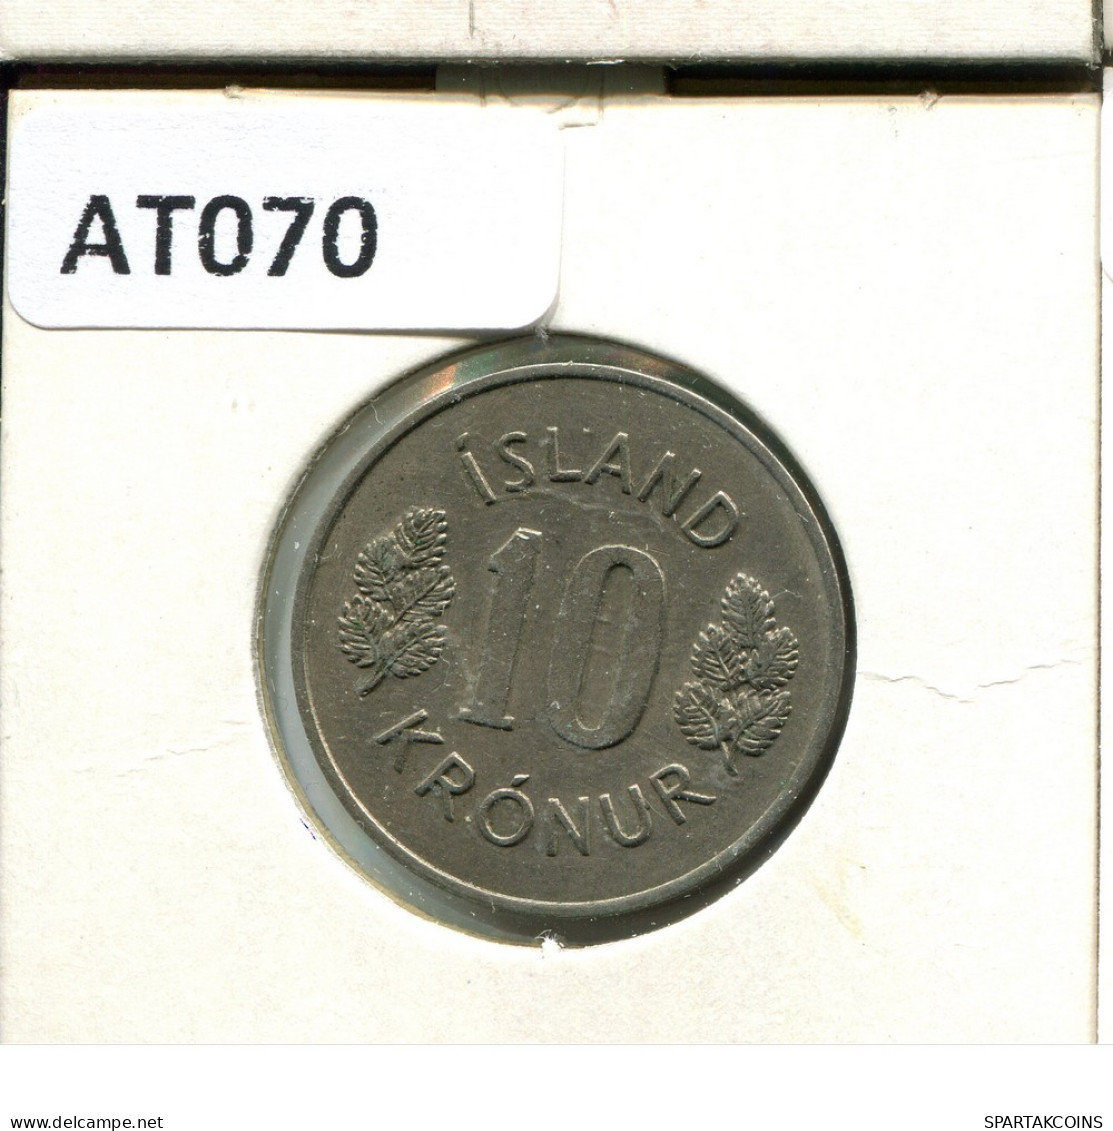 10 KRONUR 1967 ICELAND Coin #AT070.U.A - Islandia